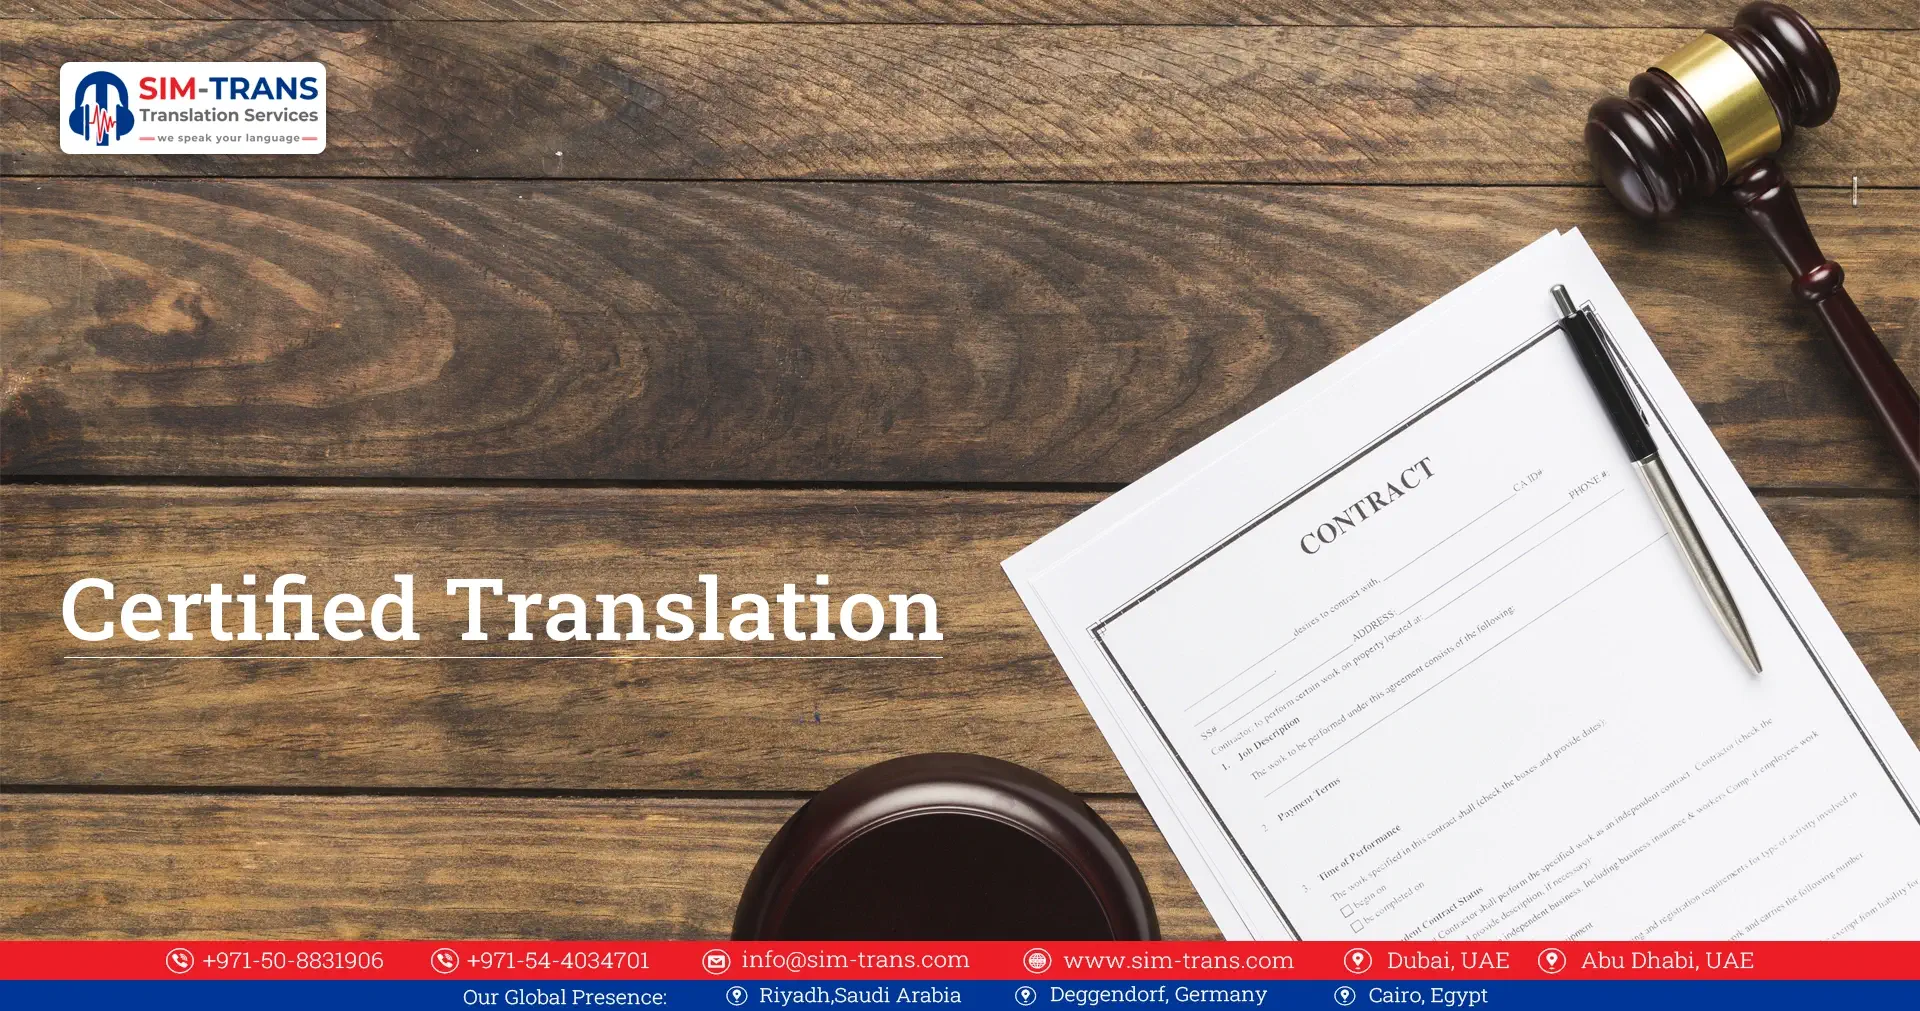 Explore Sim-trans for Official Document Translations